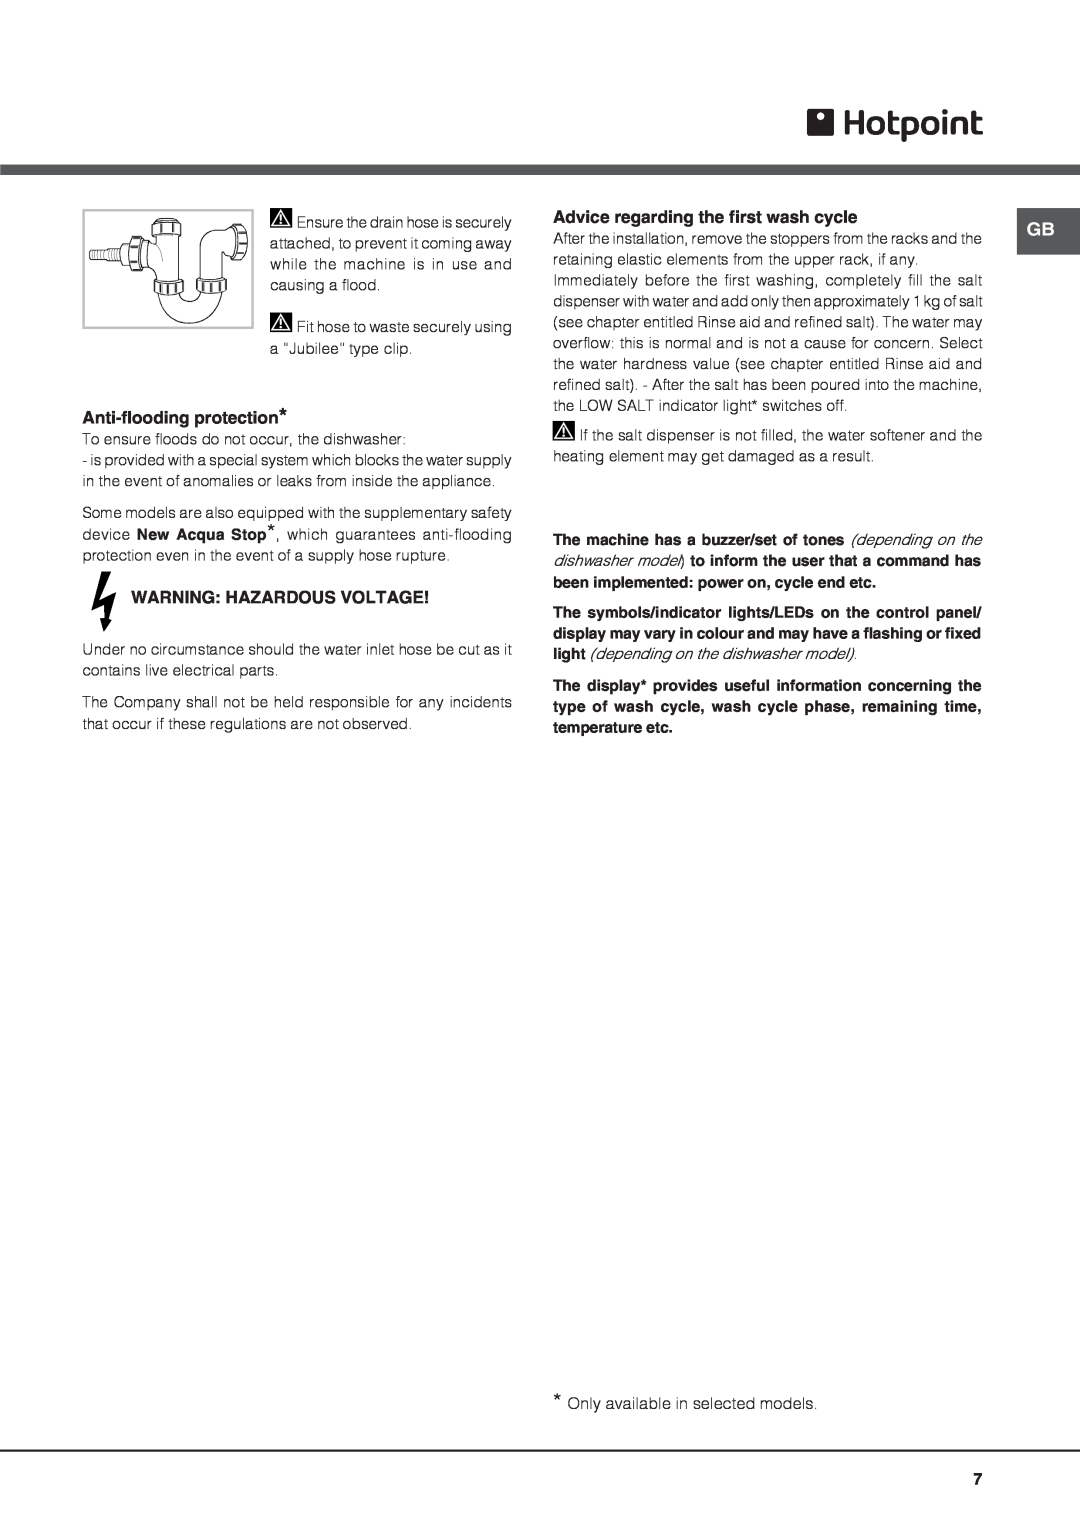 Hotpoint FDFL 11010 manual Anti-floodingprotection, Warning Hazardous Voltage, Advice regarding the first wash cycle 